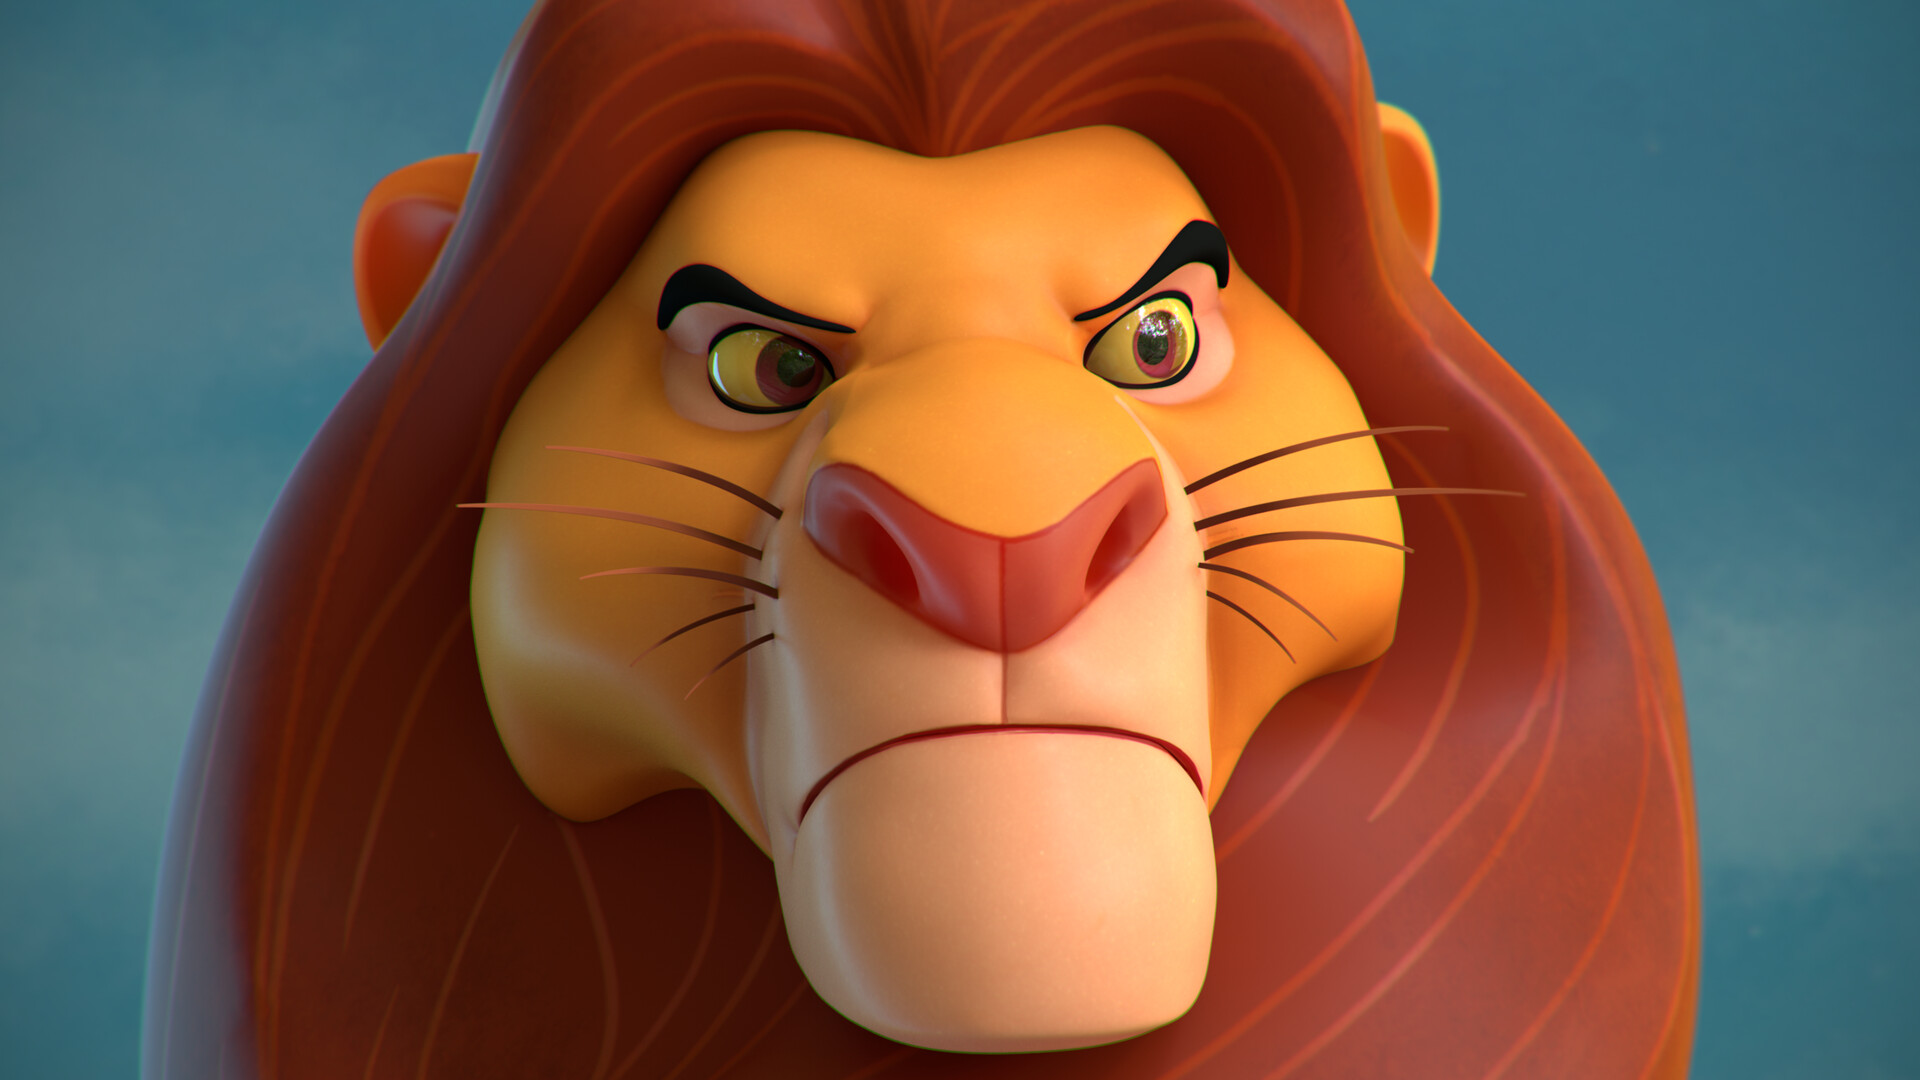 Artstation - The Lion King - Mufasa